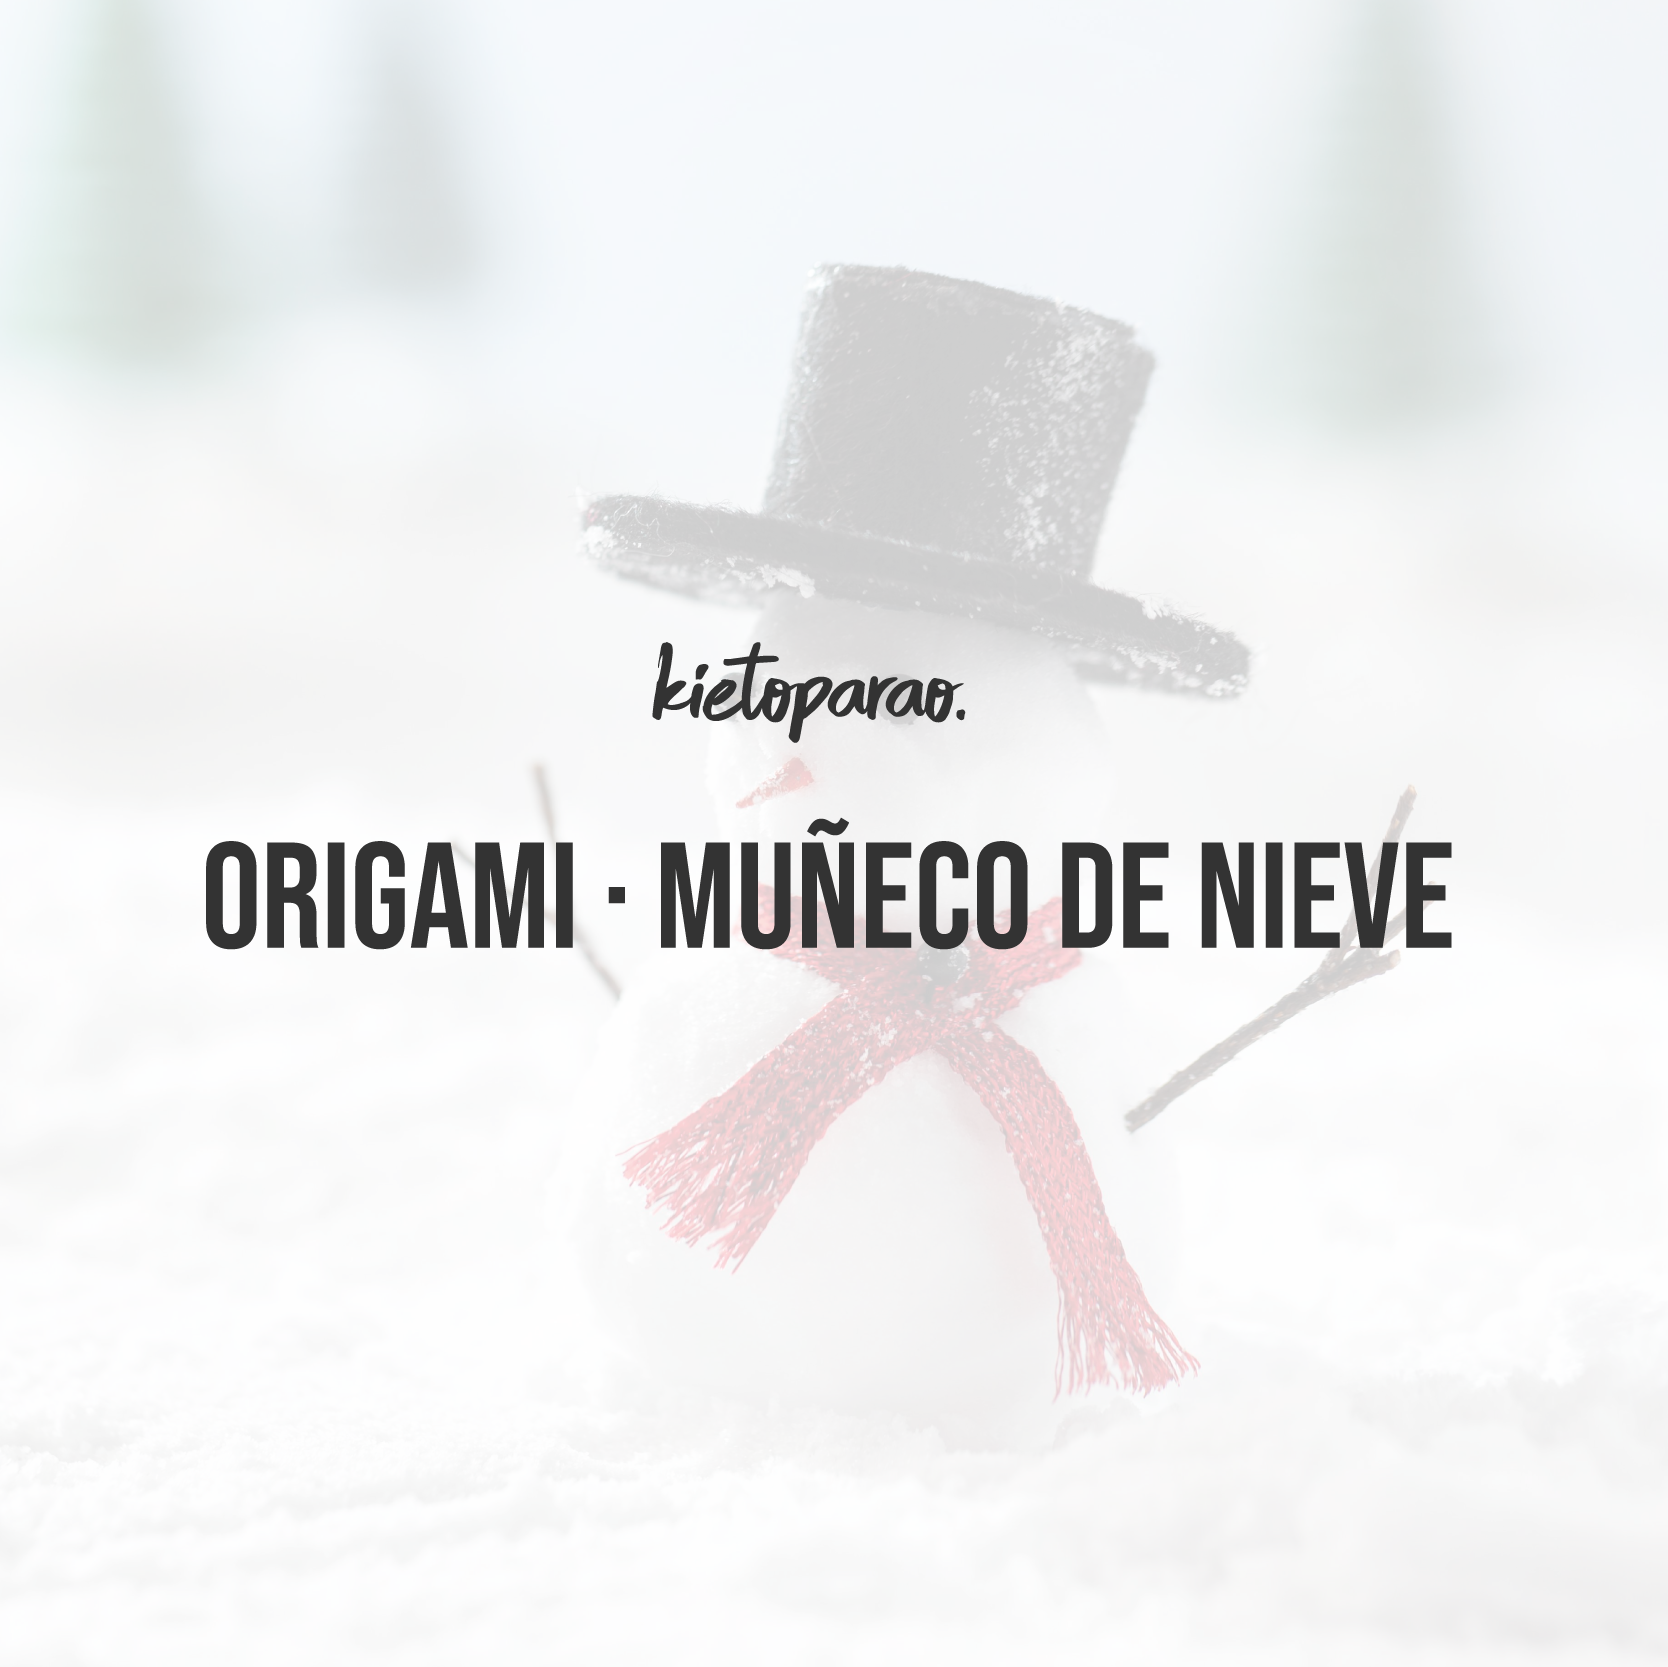 Origami muñeco de nieve